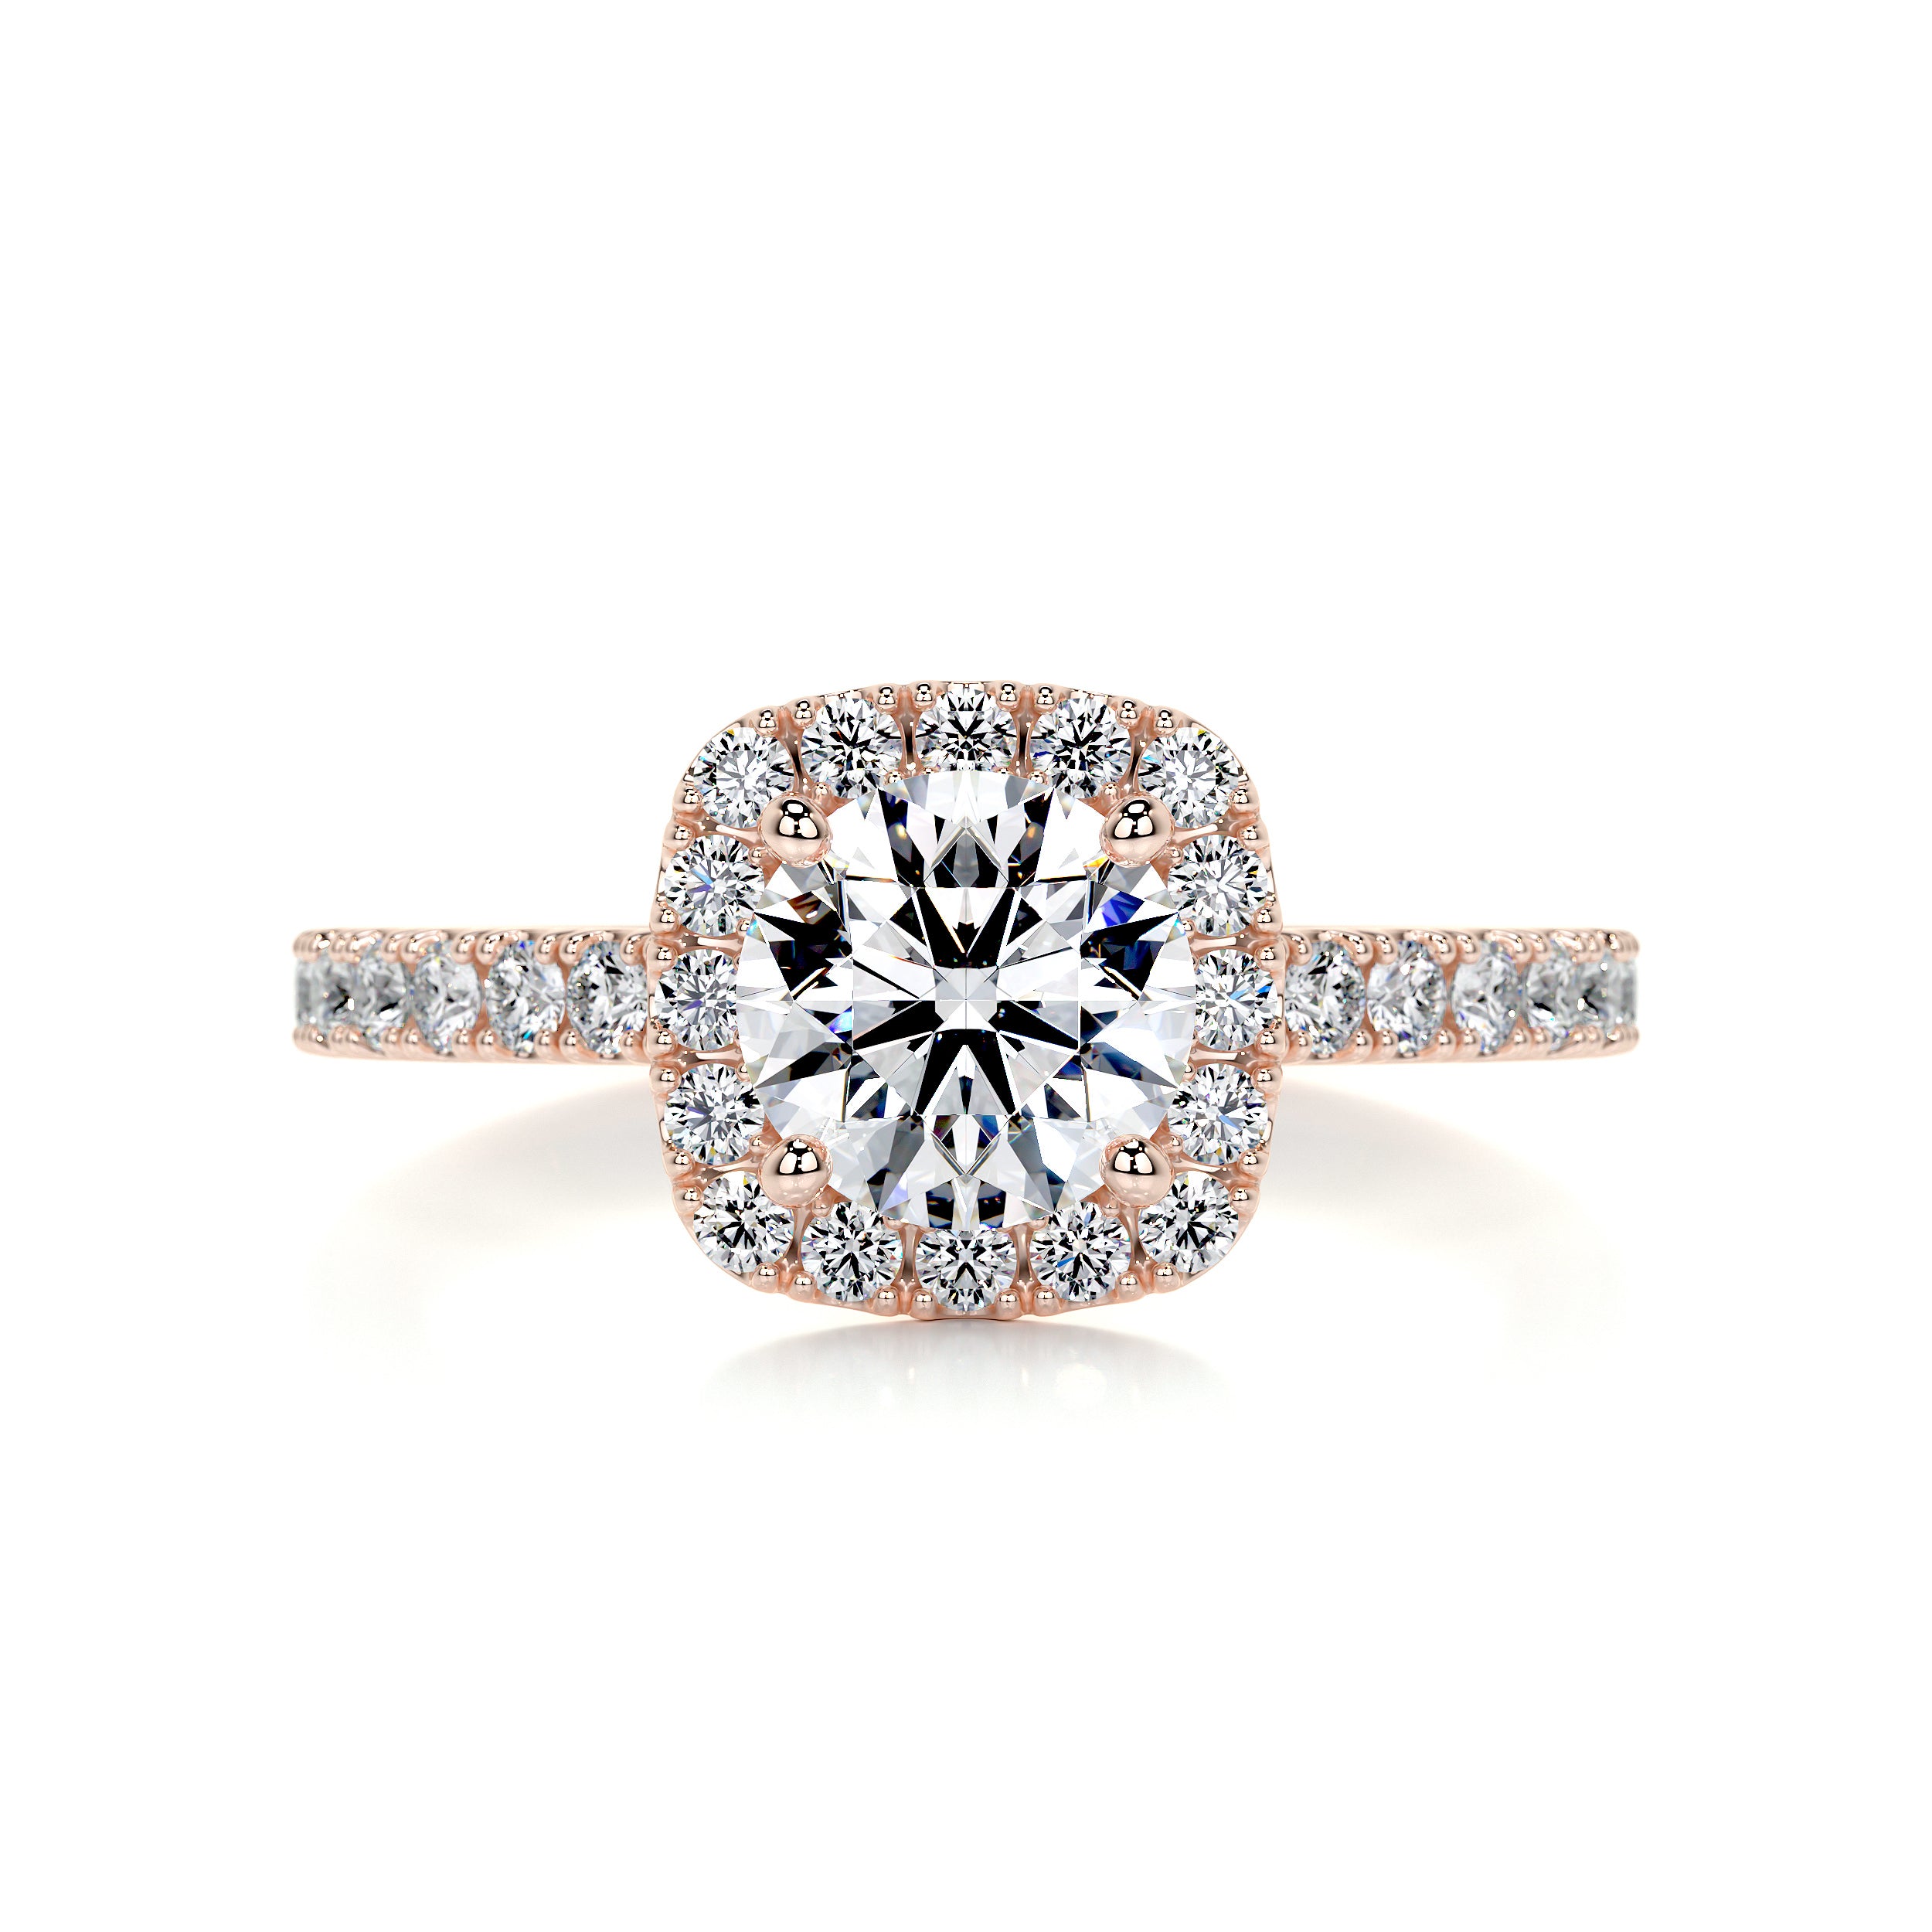 Claudia Diamond Engagement Ring   (1.4 Carat) -14K Rose Gold